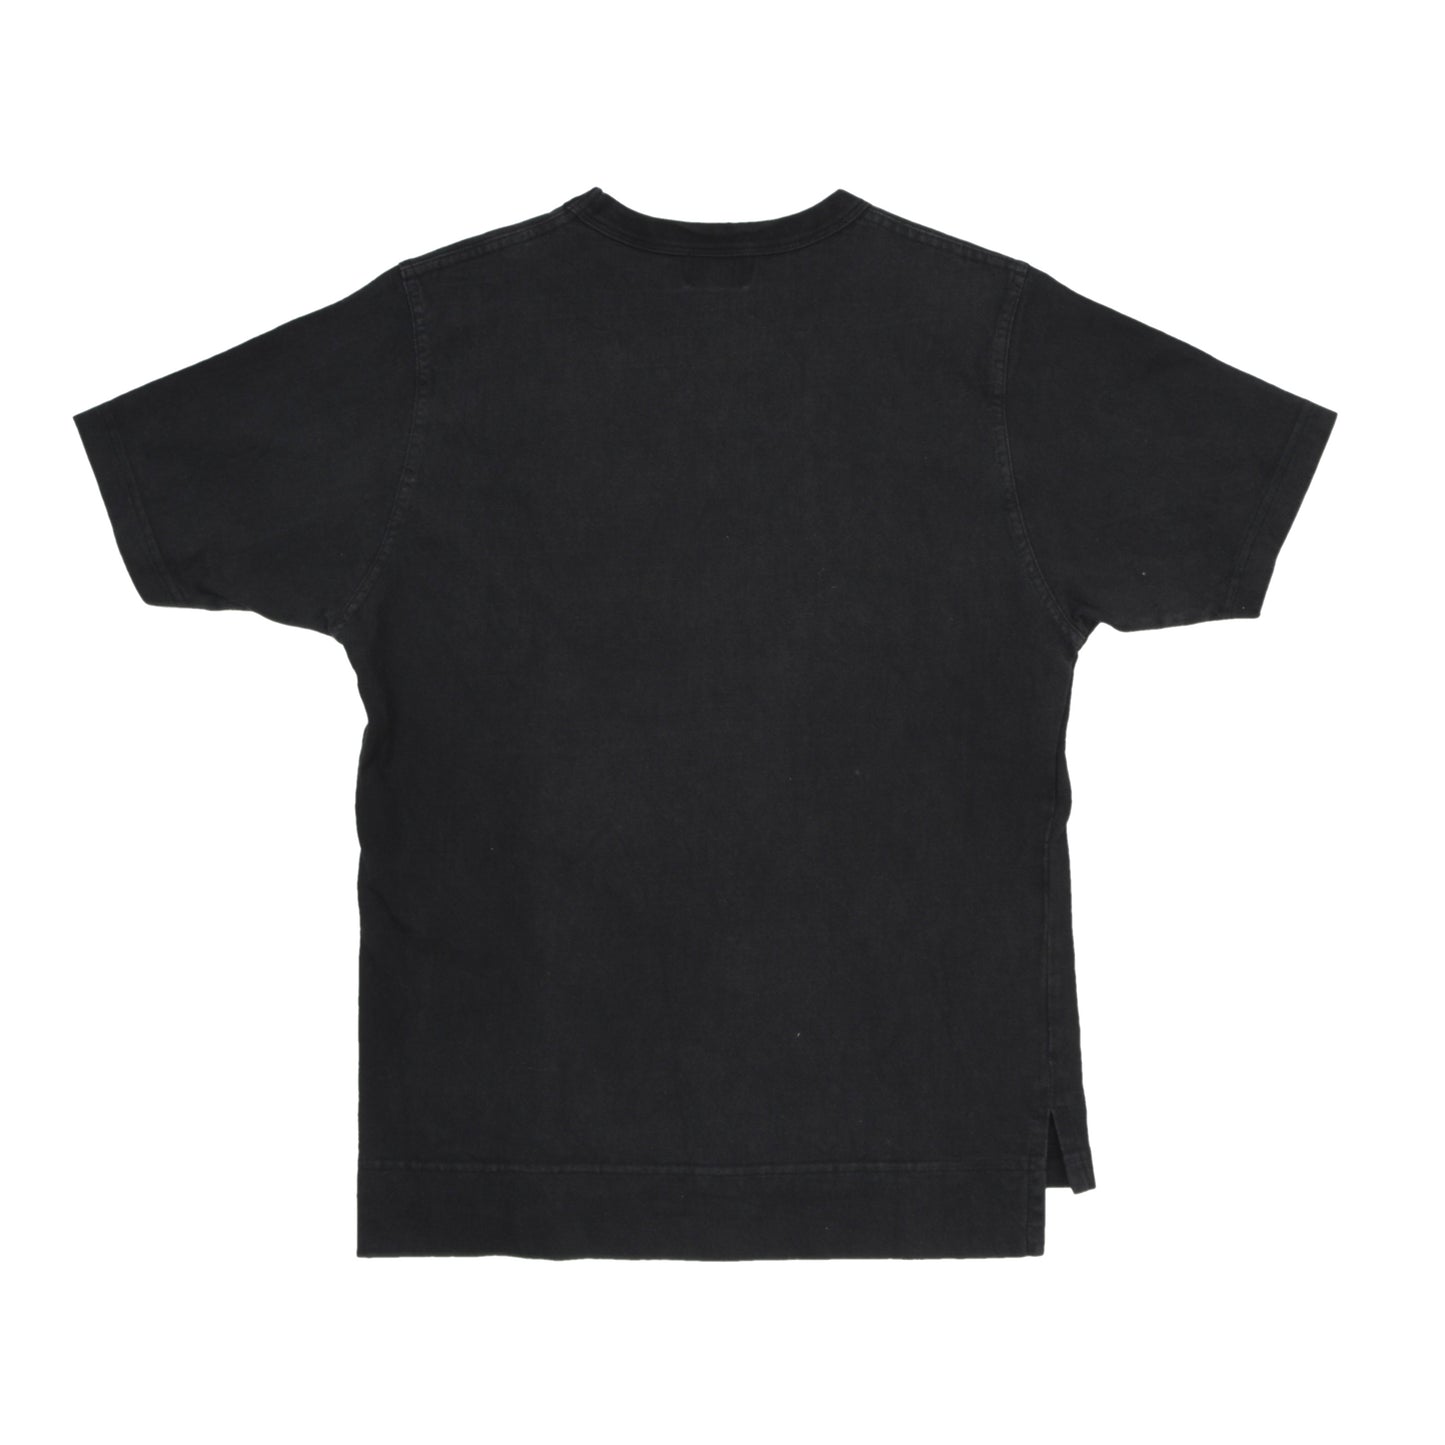 Buco Roadmaster T-Shirt Size S - Black